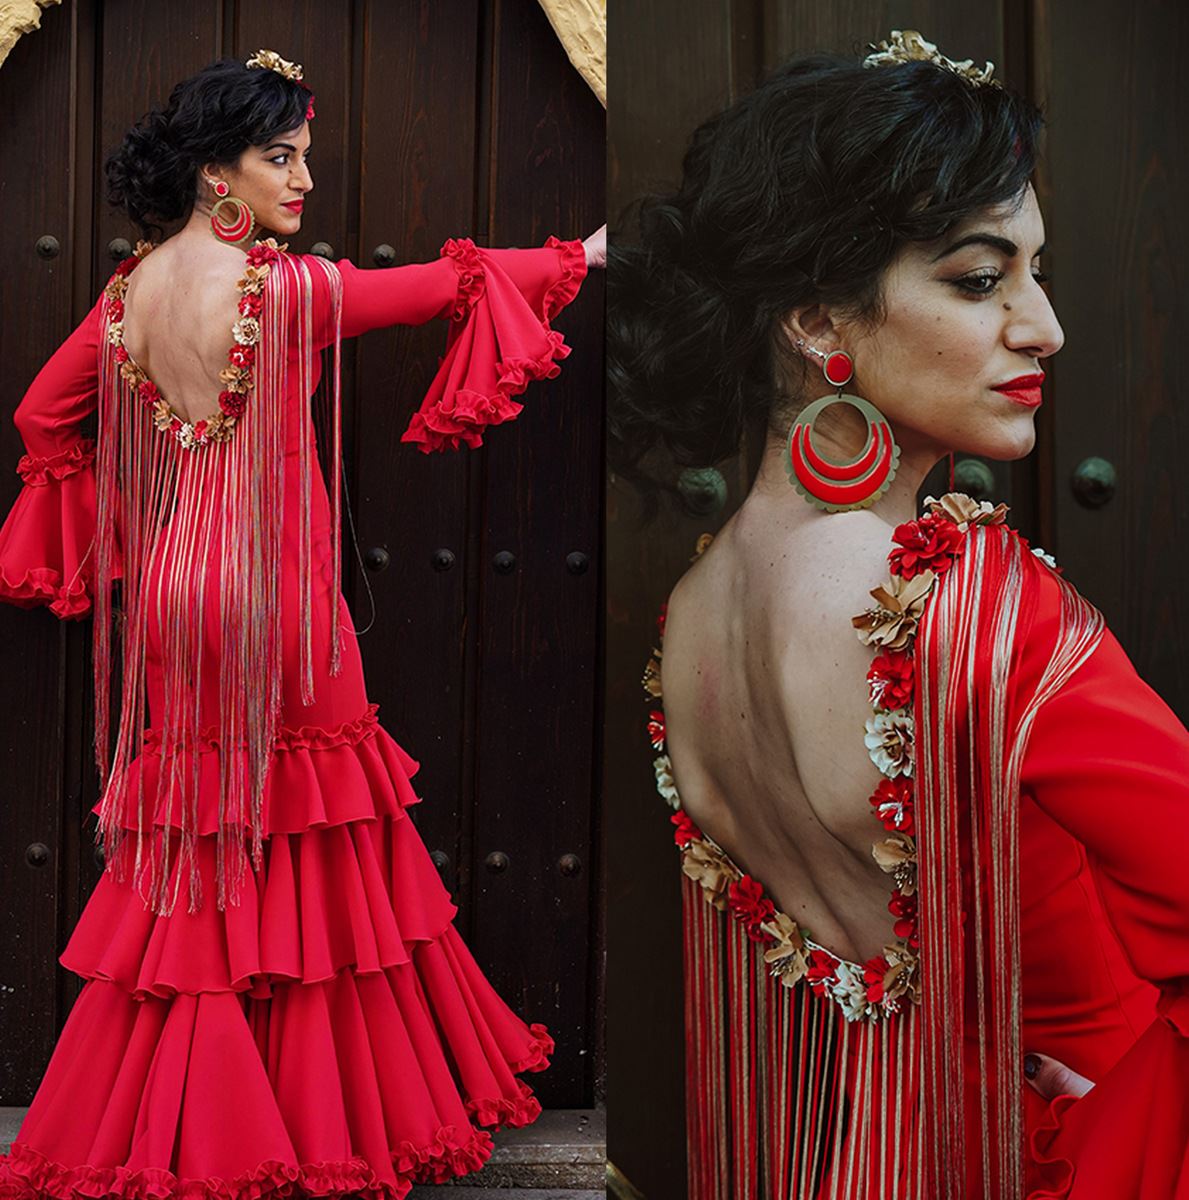 Vestido Flecos Modelo Lentisco Rojo, Trajes de Flamenca Vestidos